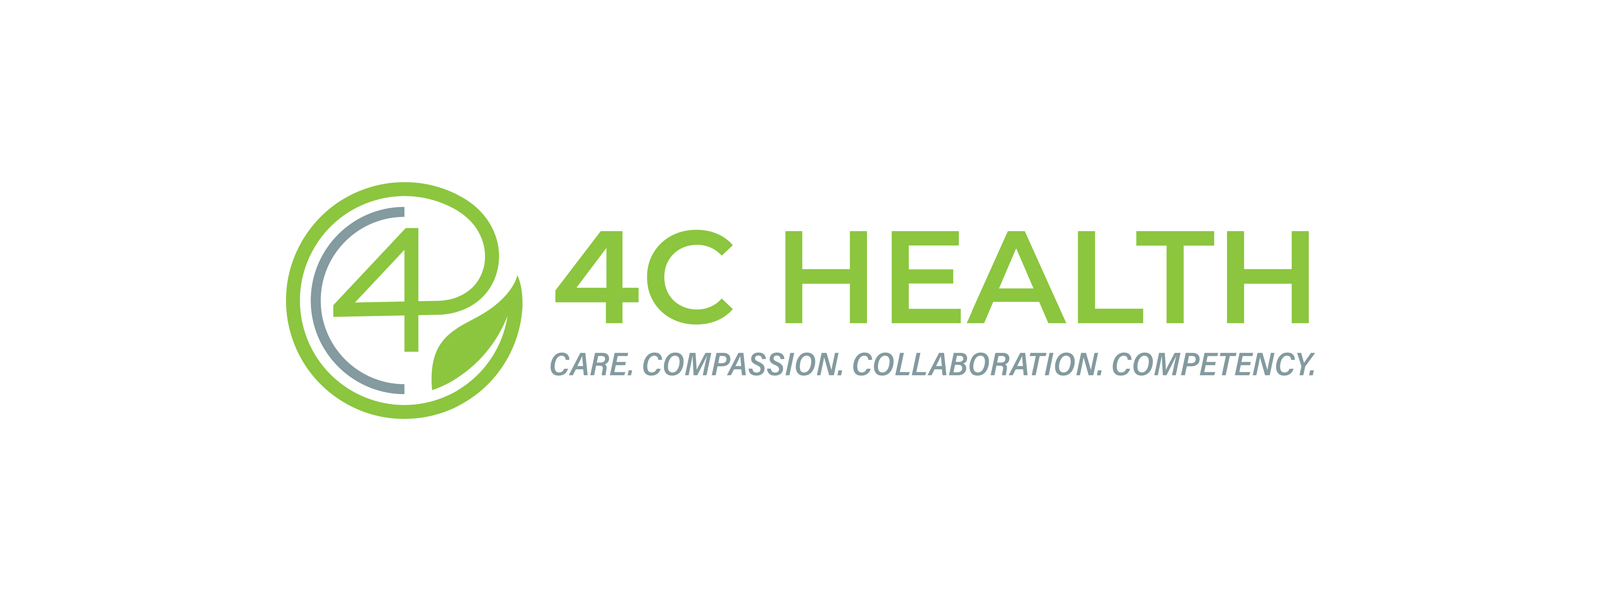 4C Health